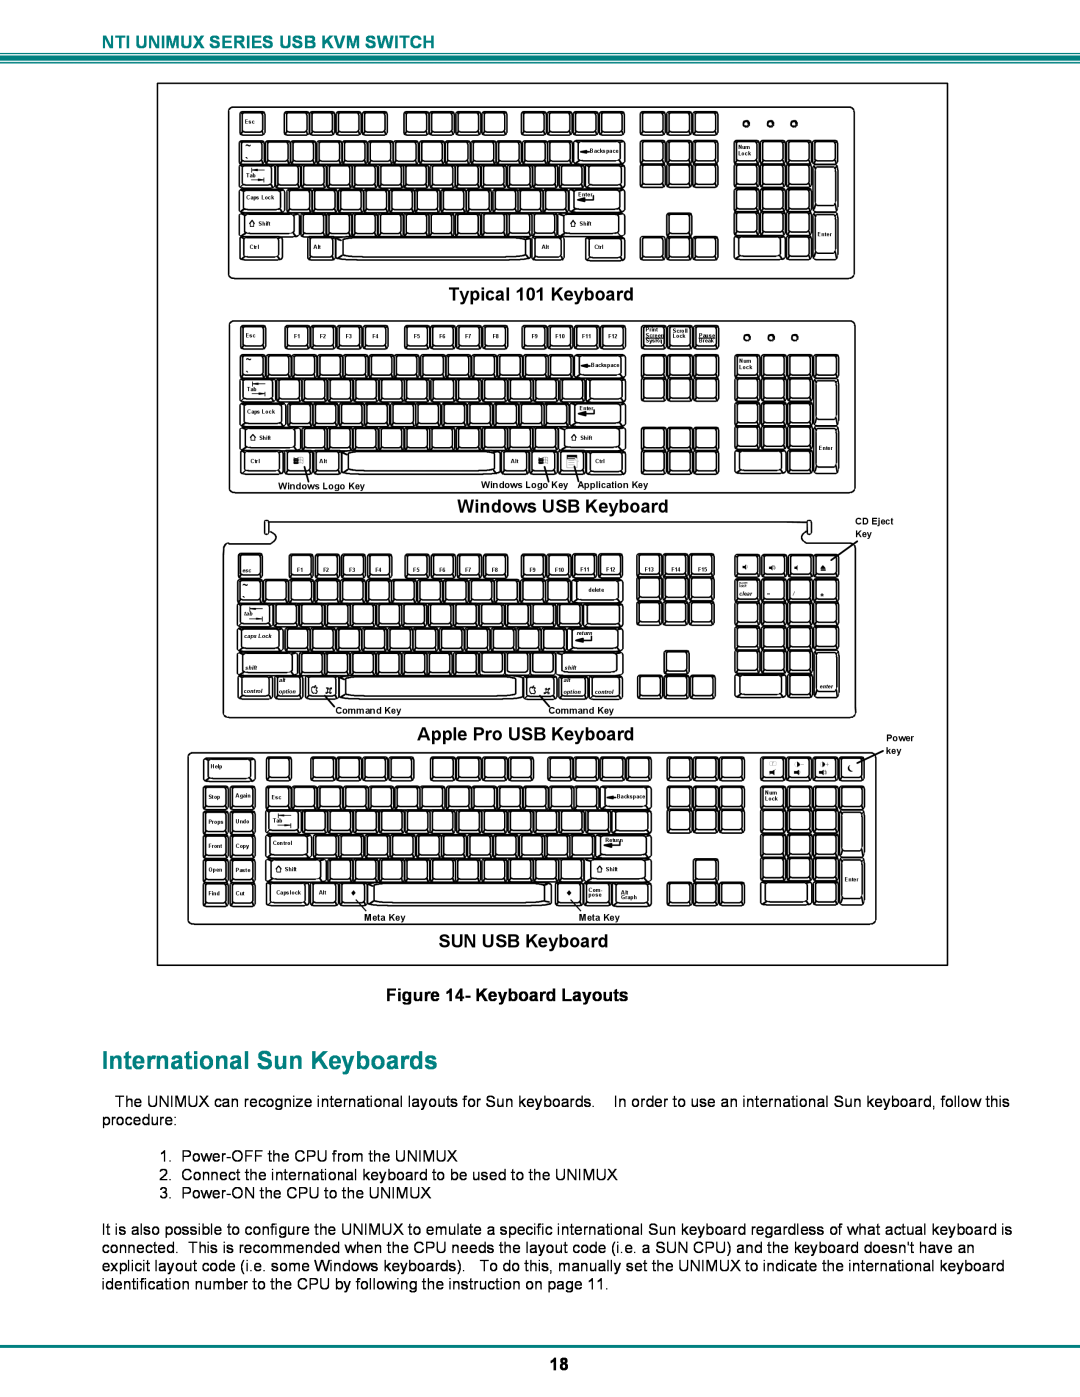 Network Technologies UNIMUX-DVI-x International Sun Keyboards, Typical 101 Keyboard, SUN USB Keyboard, Keyboard Layouts 